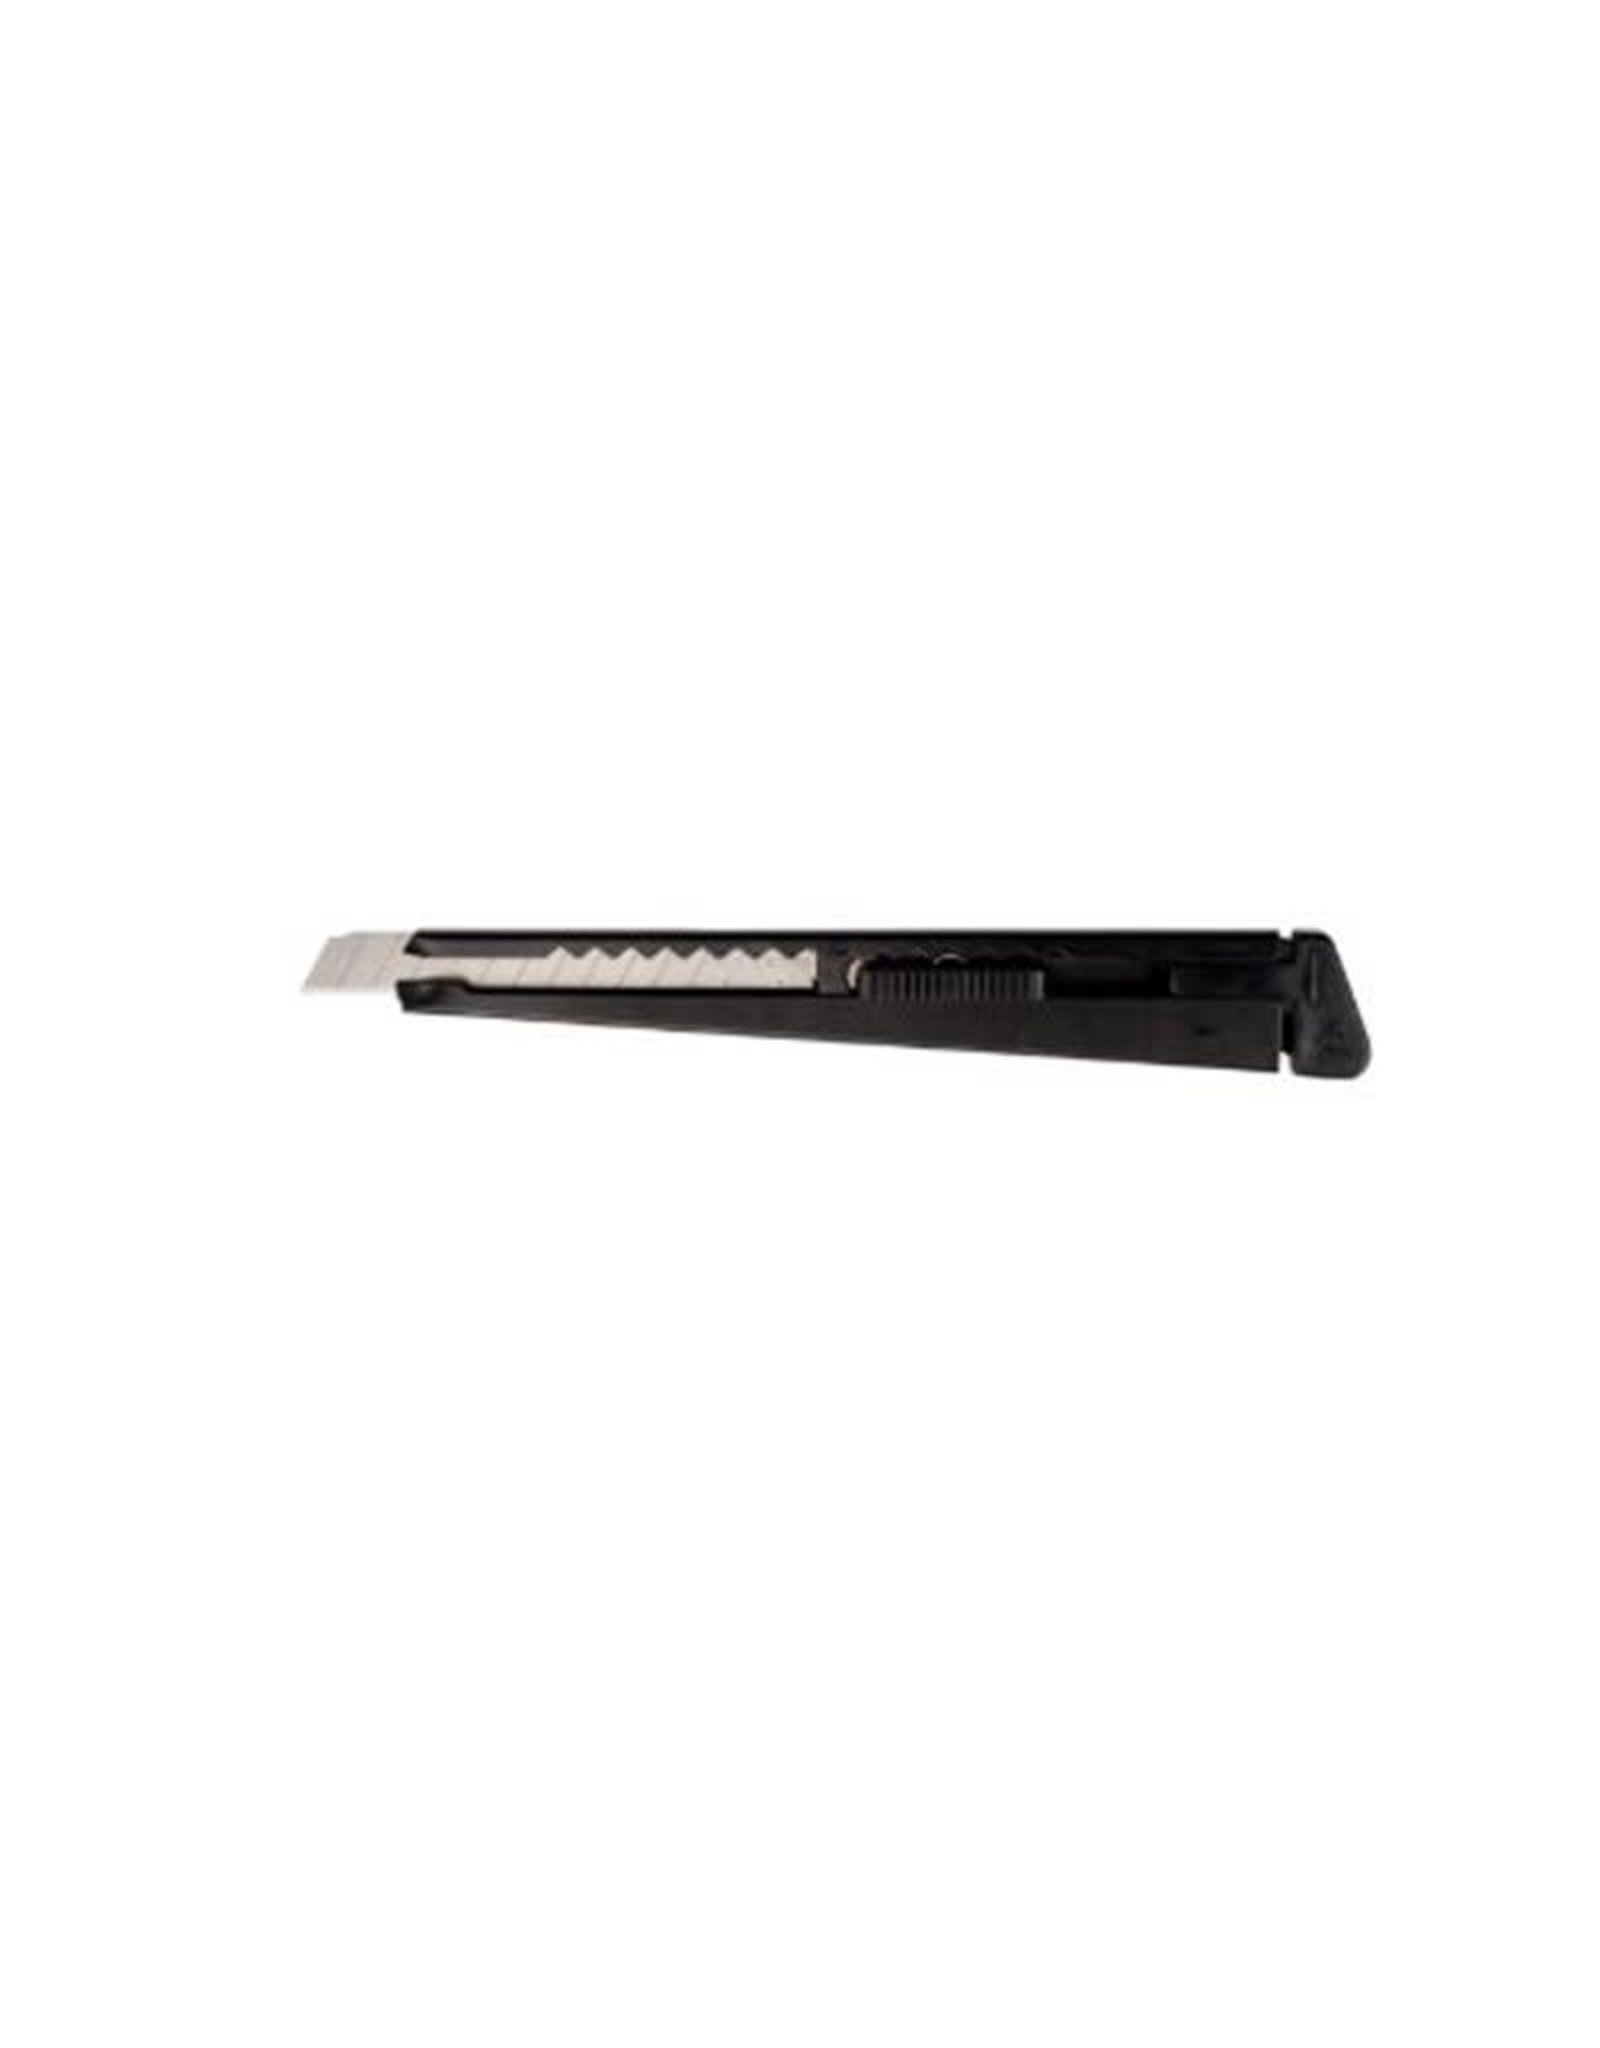 Excel Snap blade knife - for metal